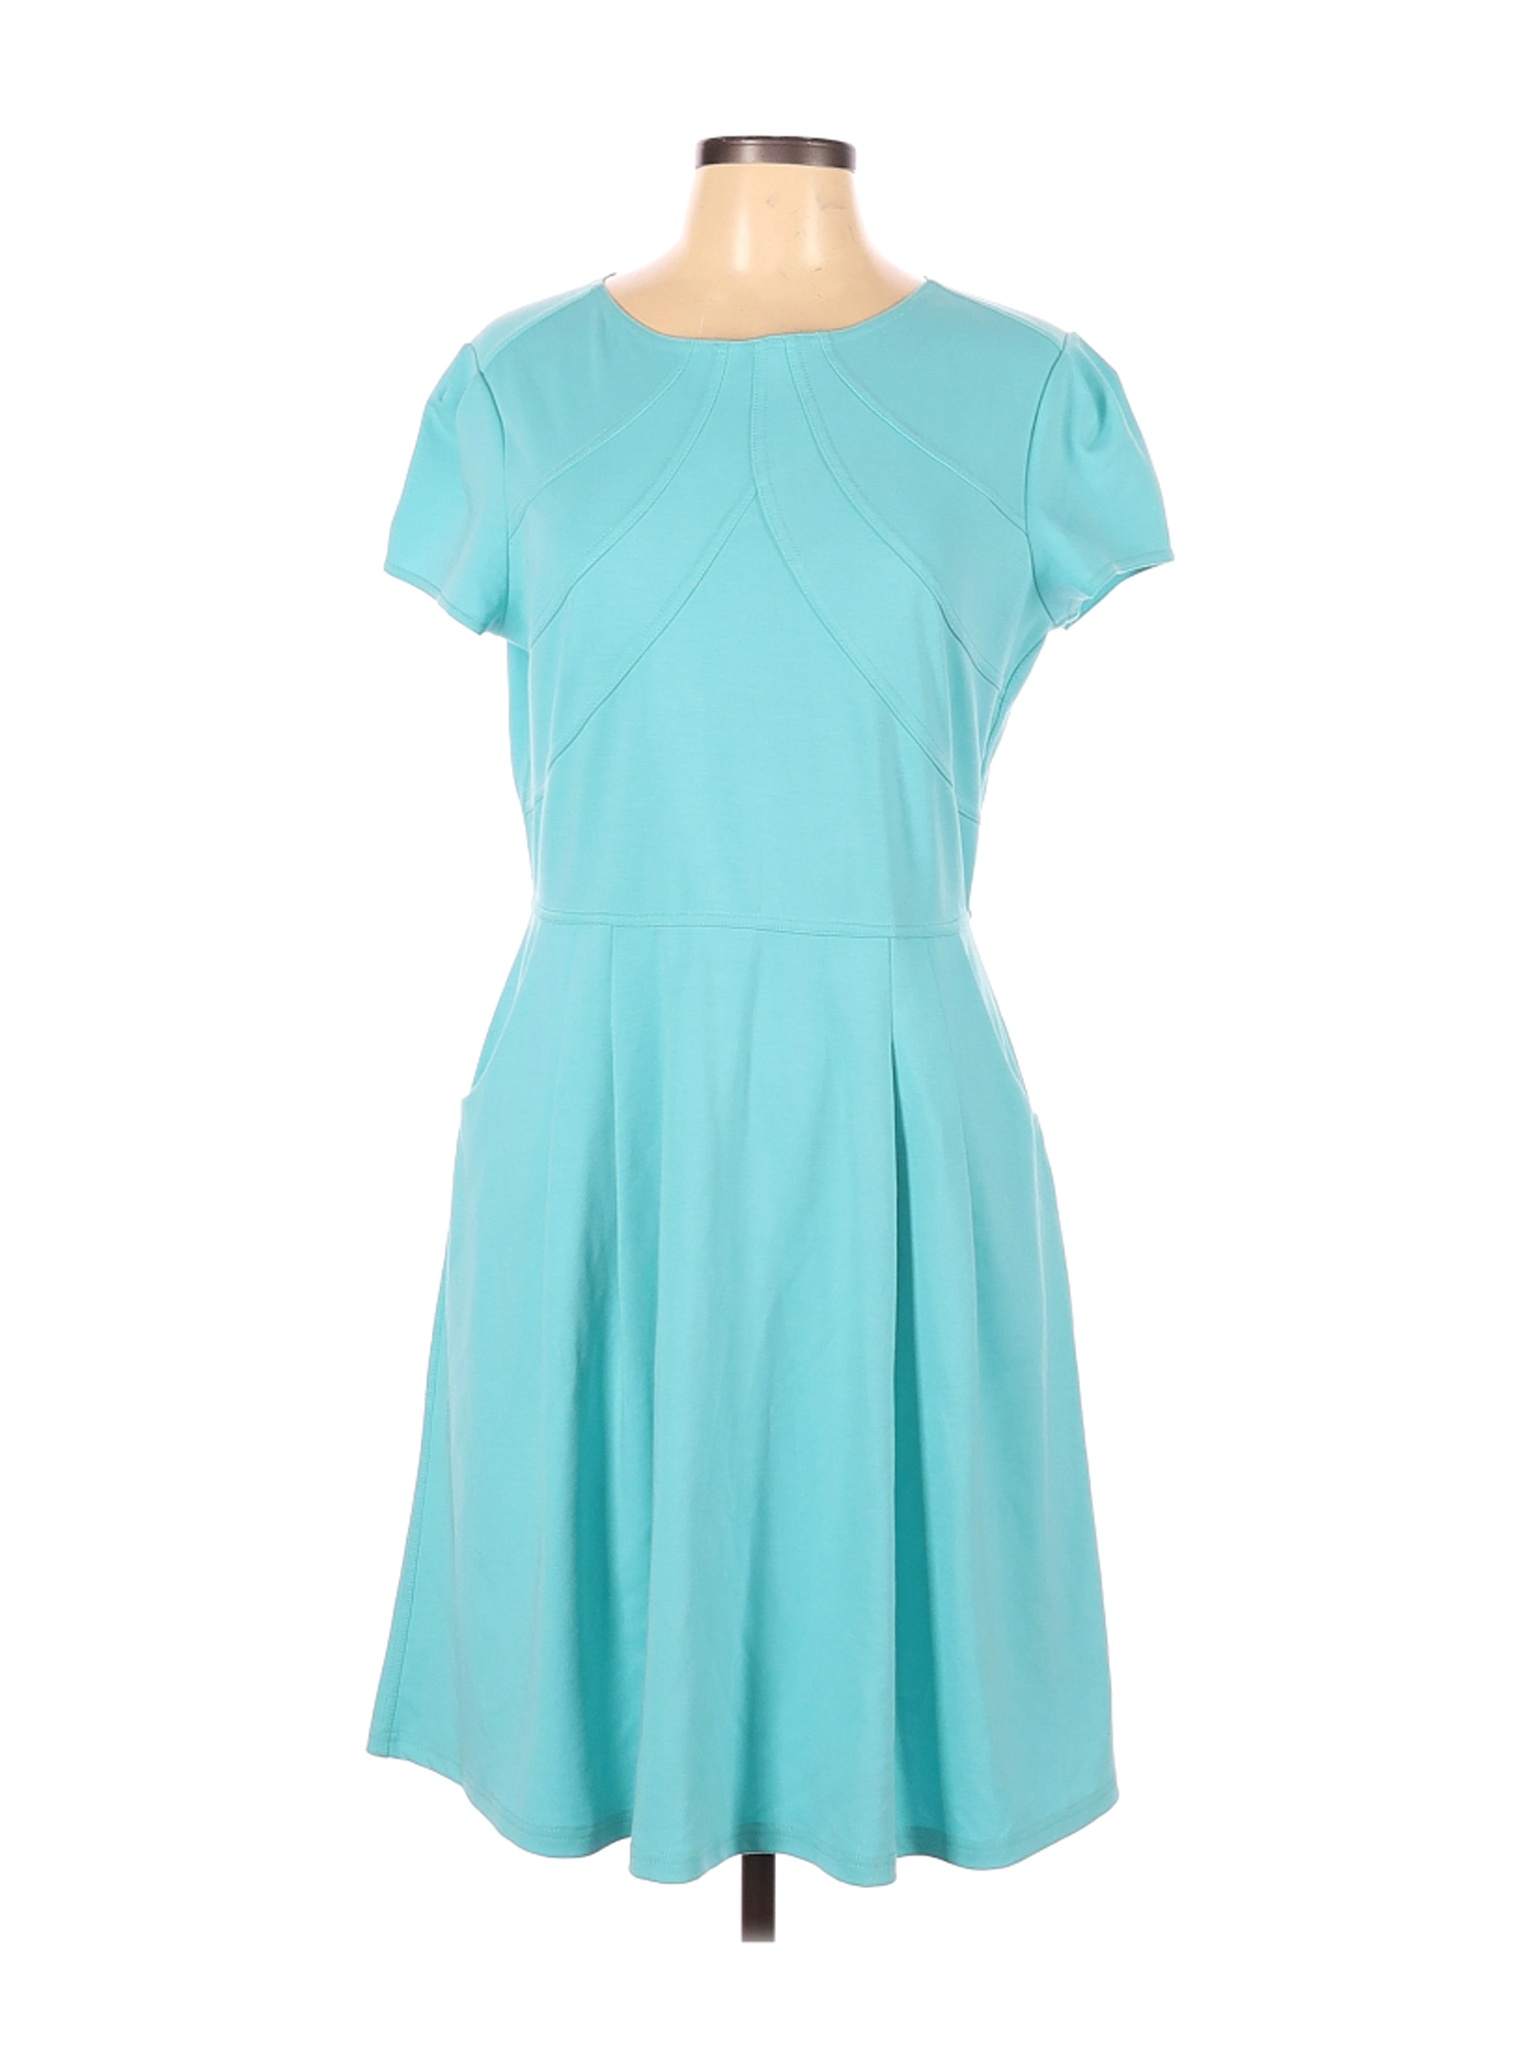 Alex Marie Women Blue Casual Dress L | eBay